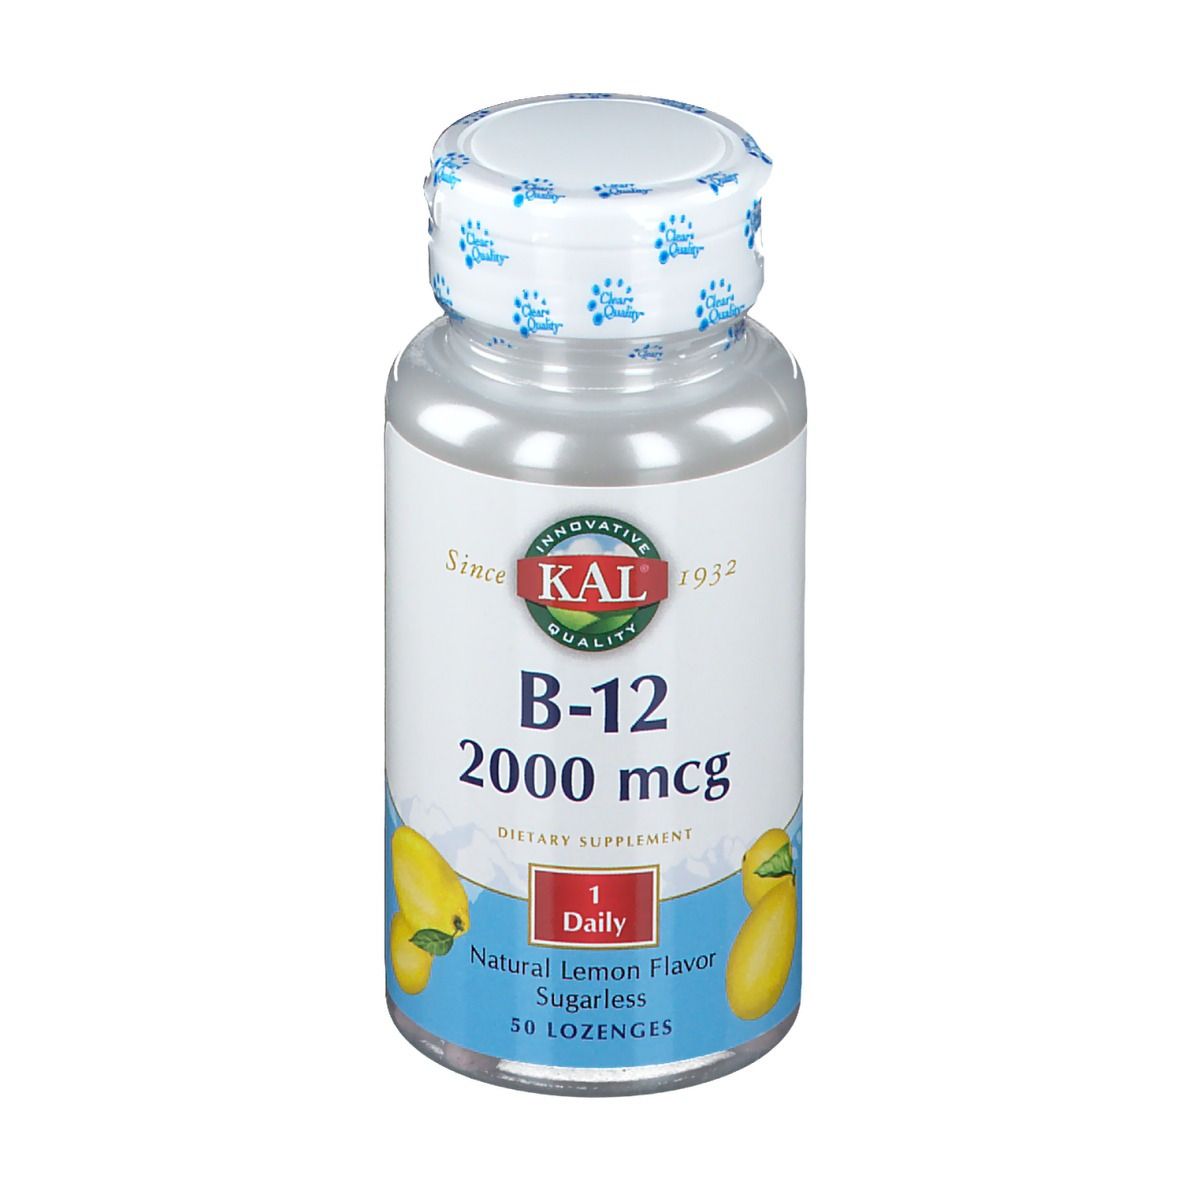 supplementa Vitamin B12 2000 mcg